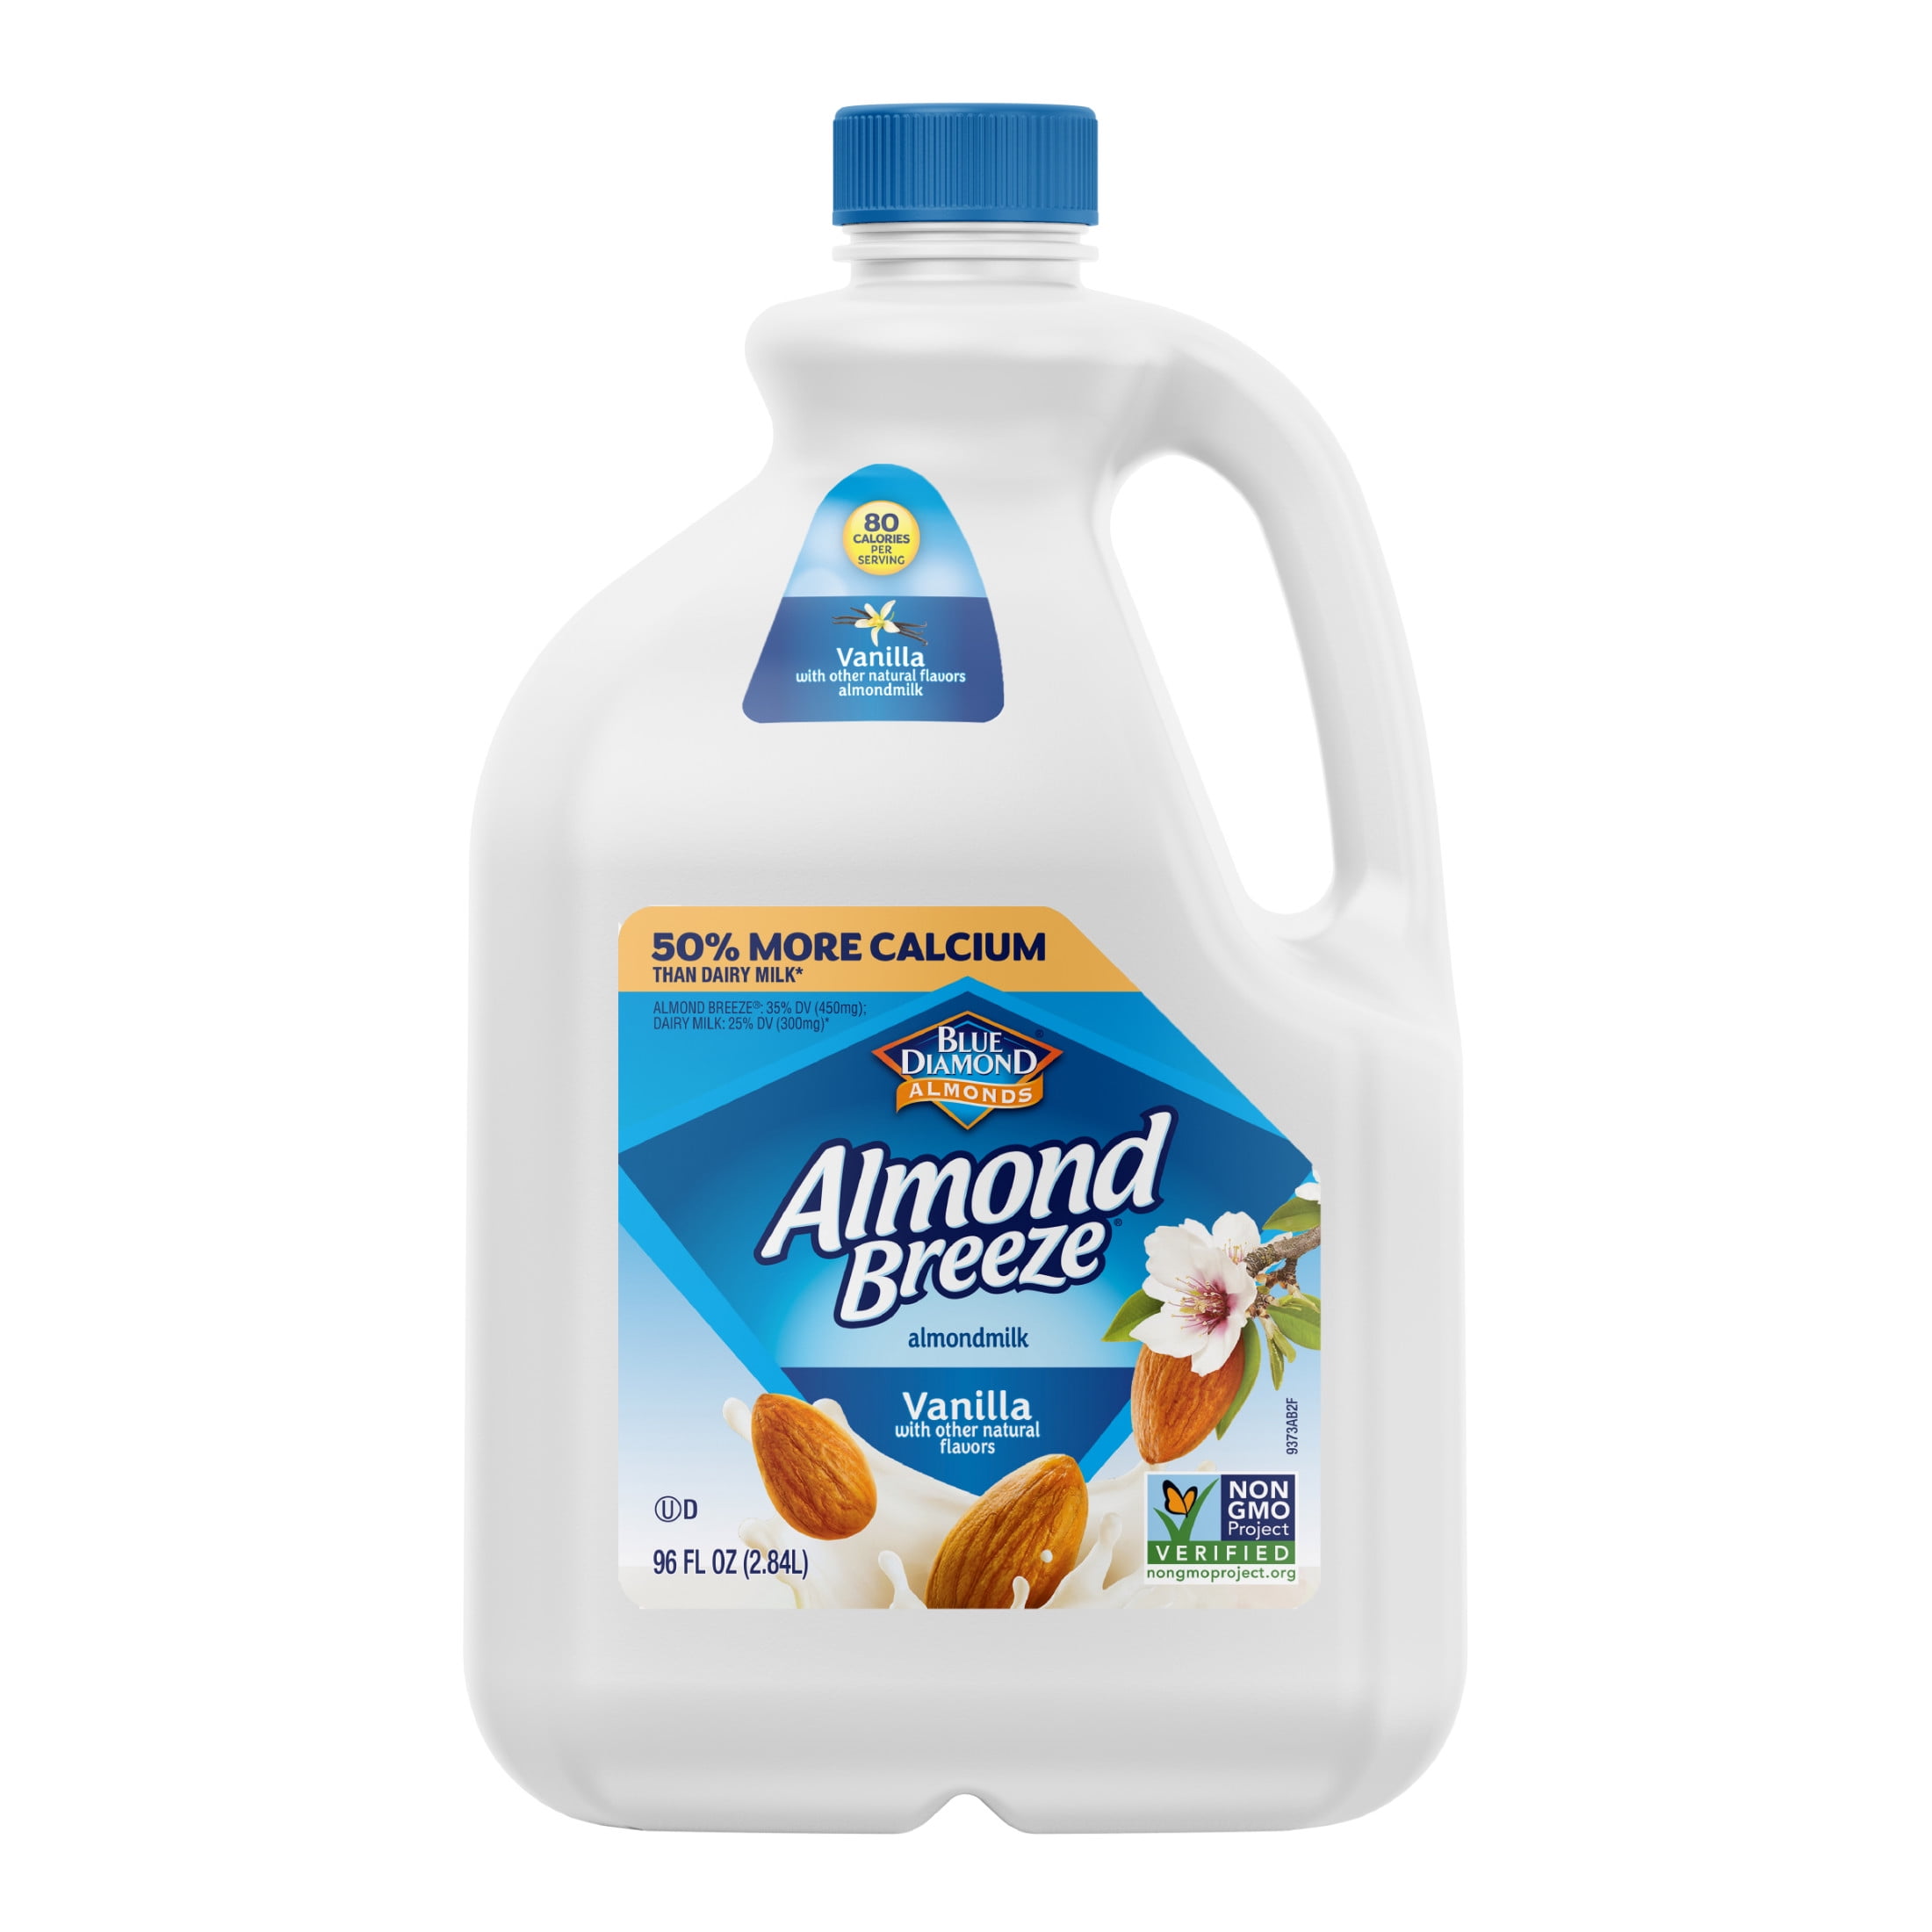 Almond Breeze Vanilla Almondmilk, 96 oz